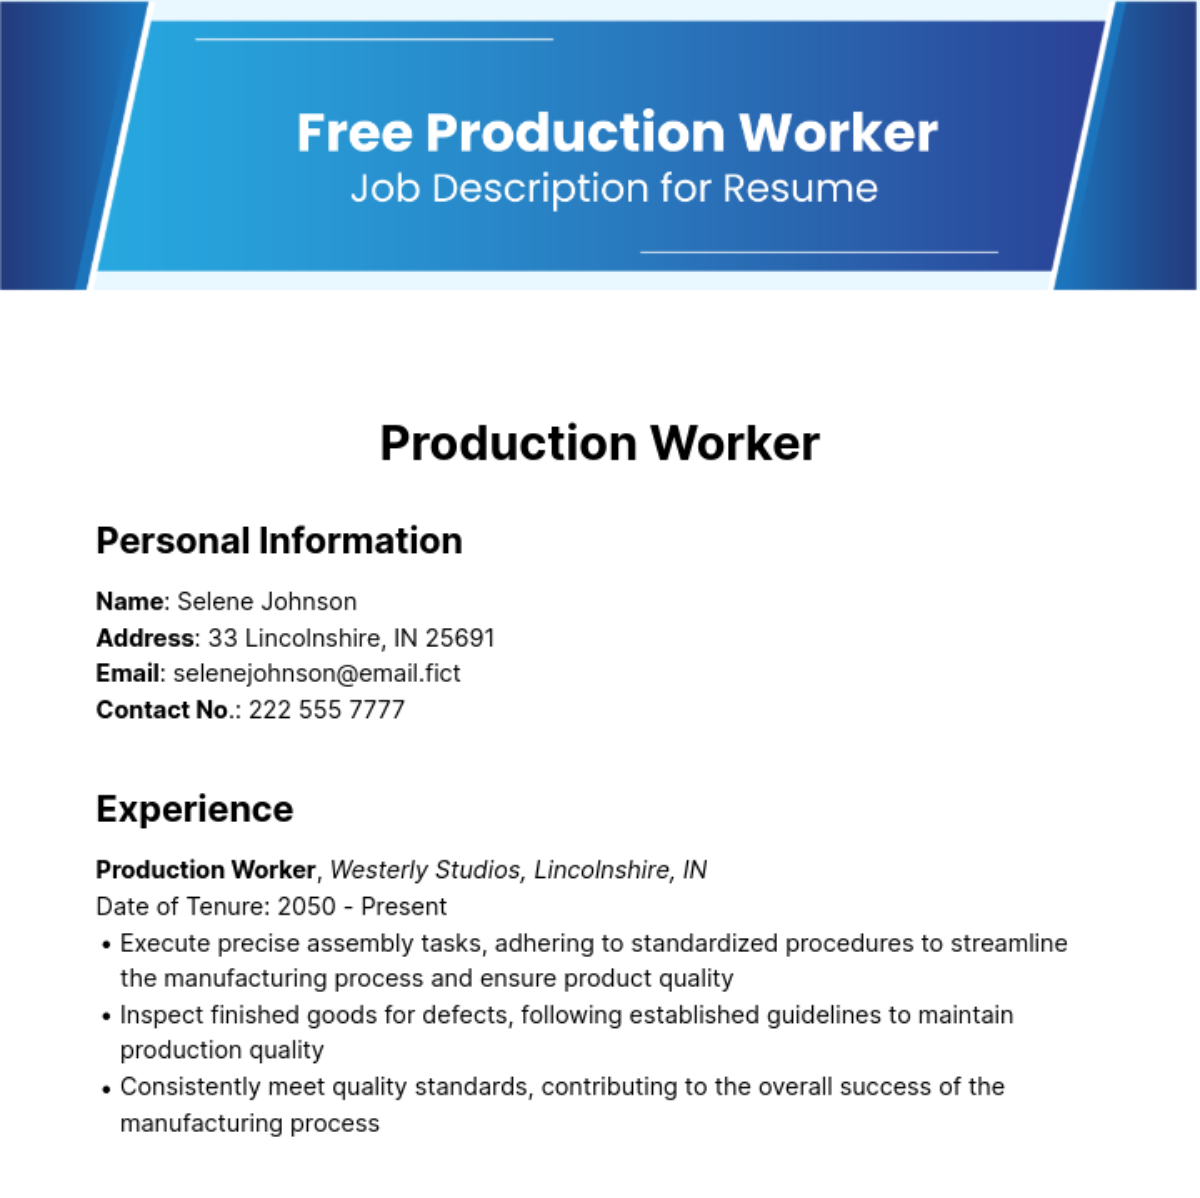 Production Worker Job Description for Resume Template